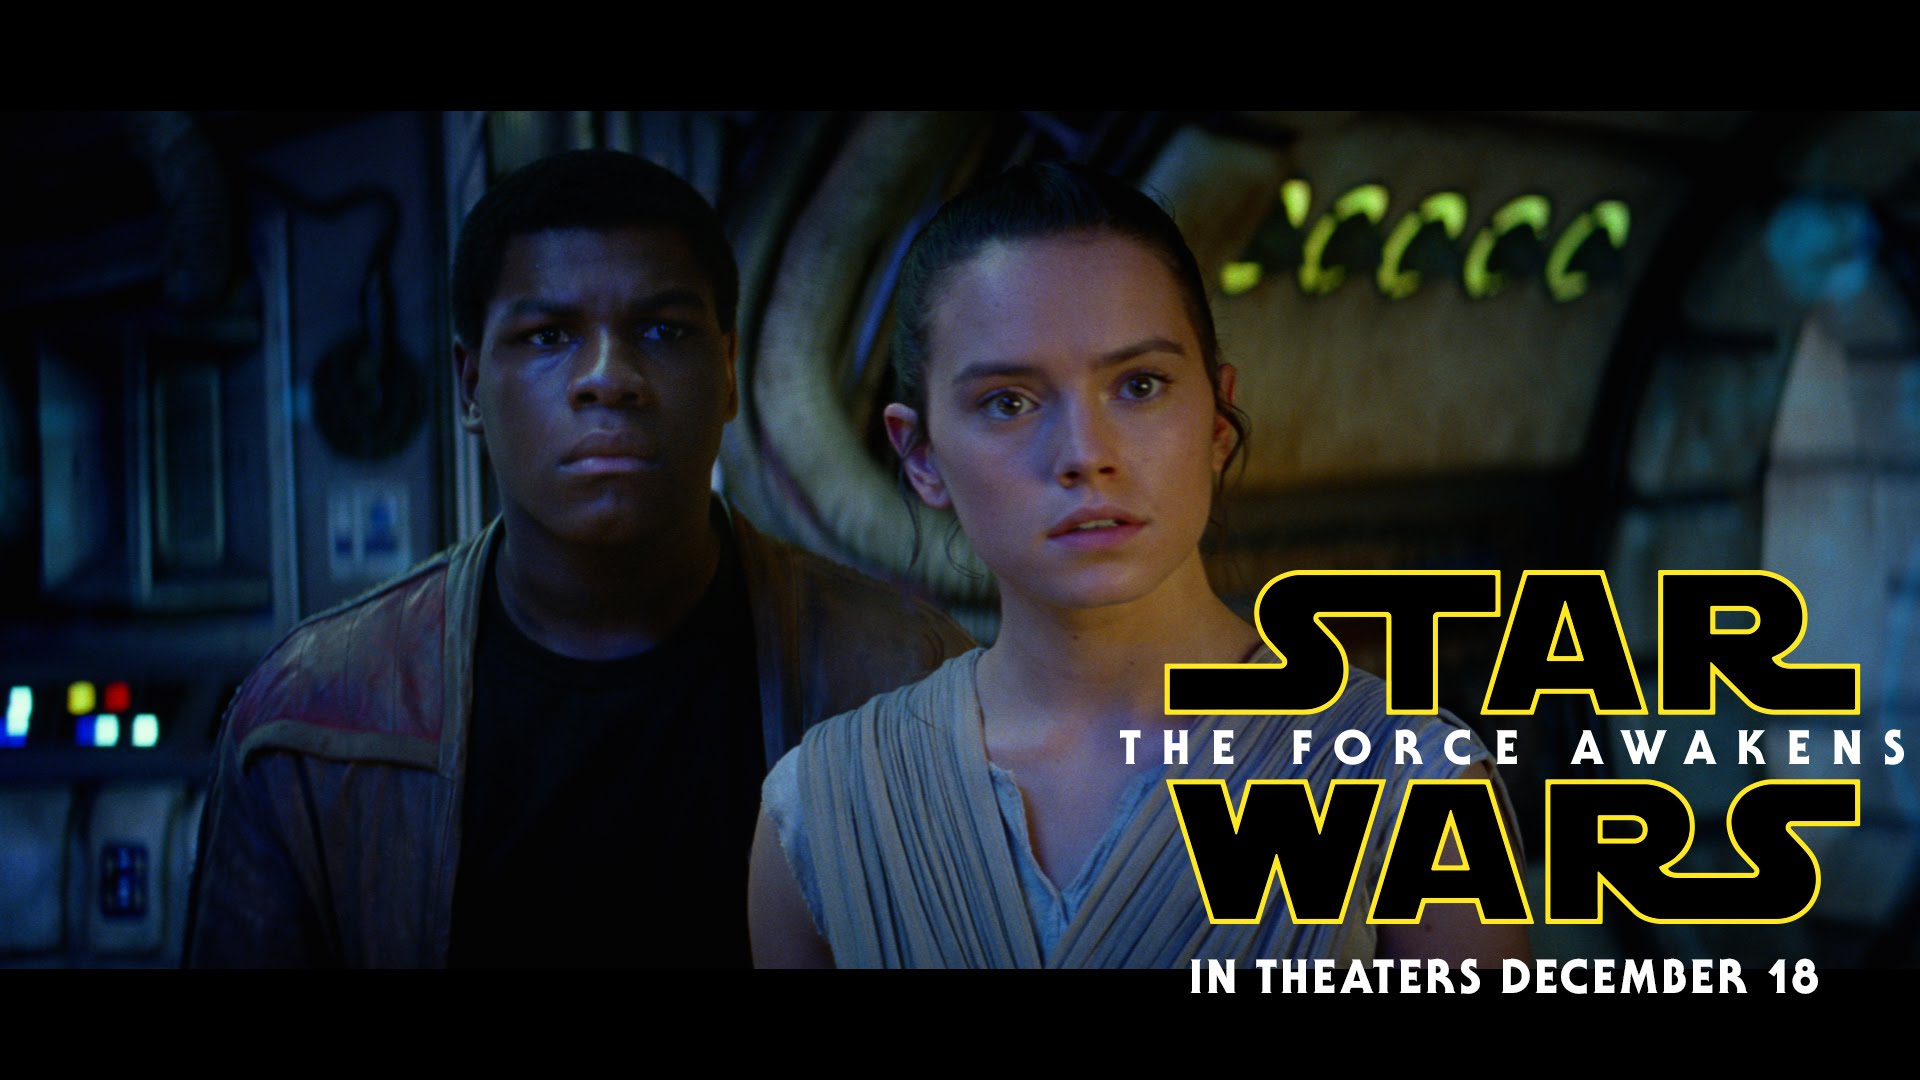 Nice Images Collection: Star Wars Episode VII: The Force Awakens Desktop Wallpapers